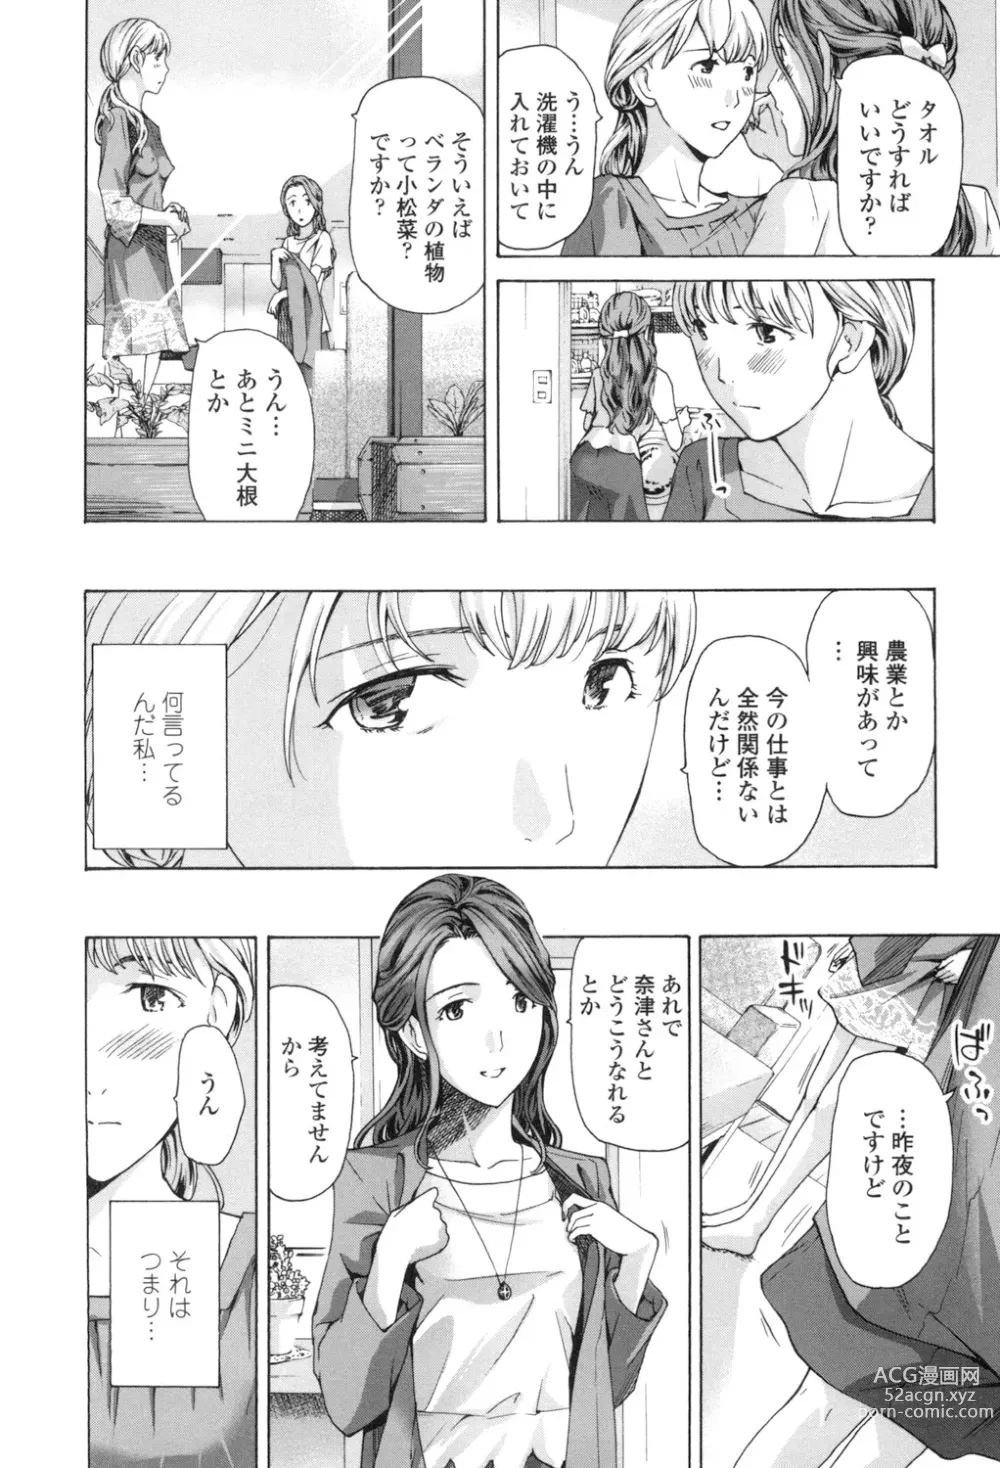 Page 14 of manga Girls Girls